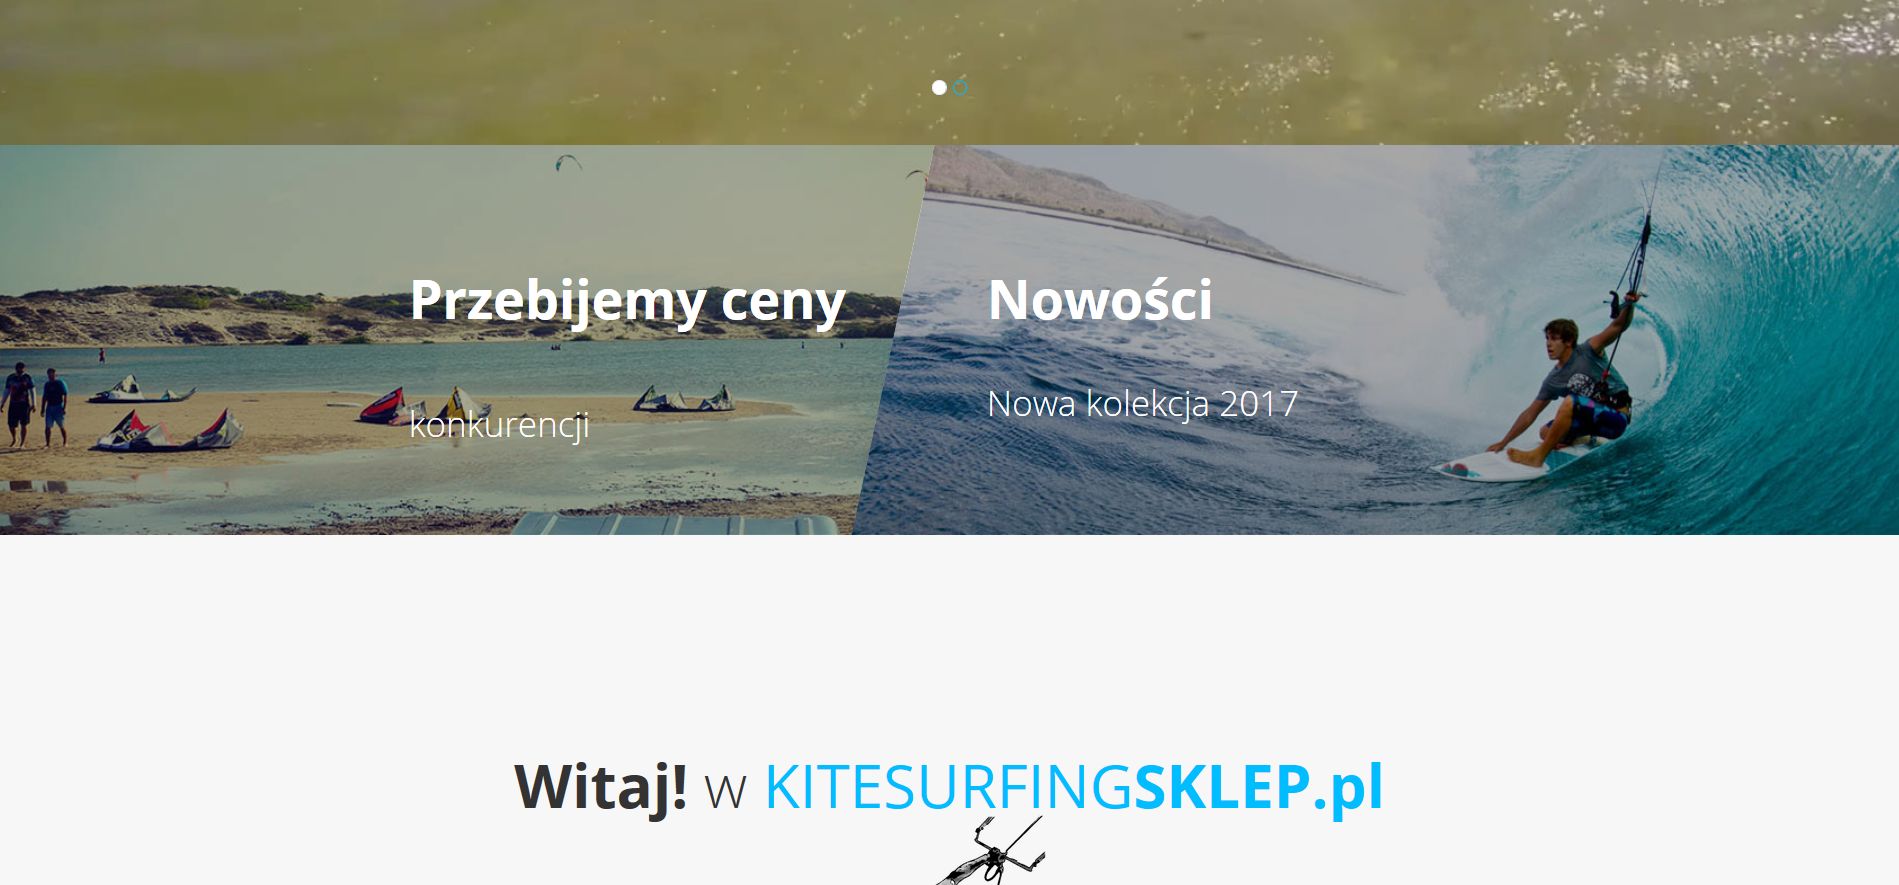 KitesurfingSklep.pl – Sprzęt do kitesurfingu